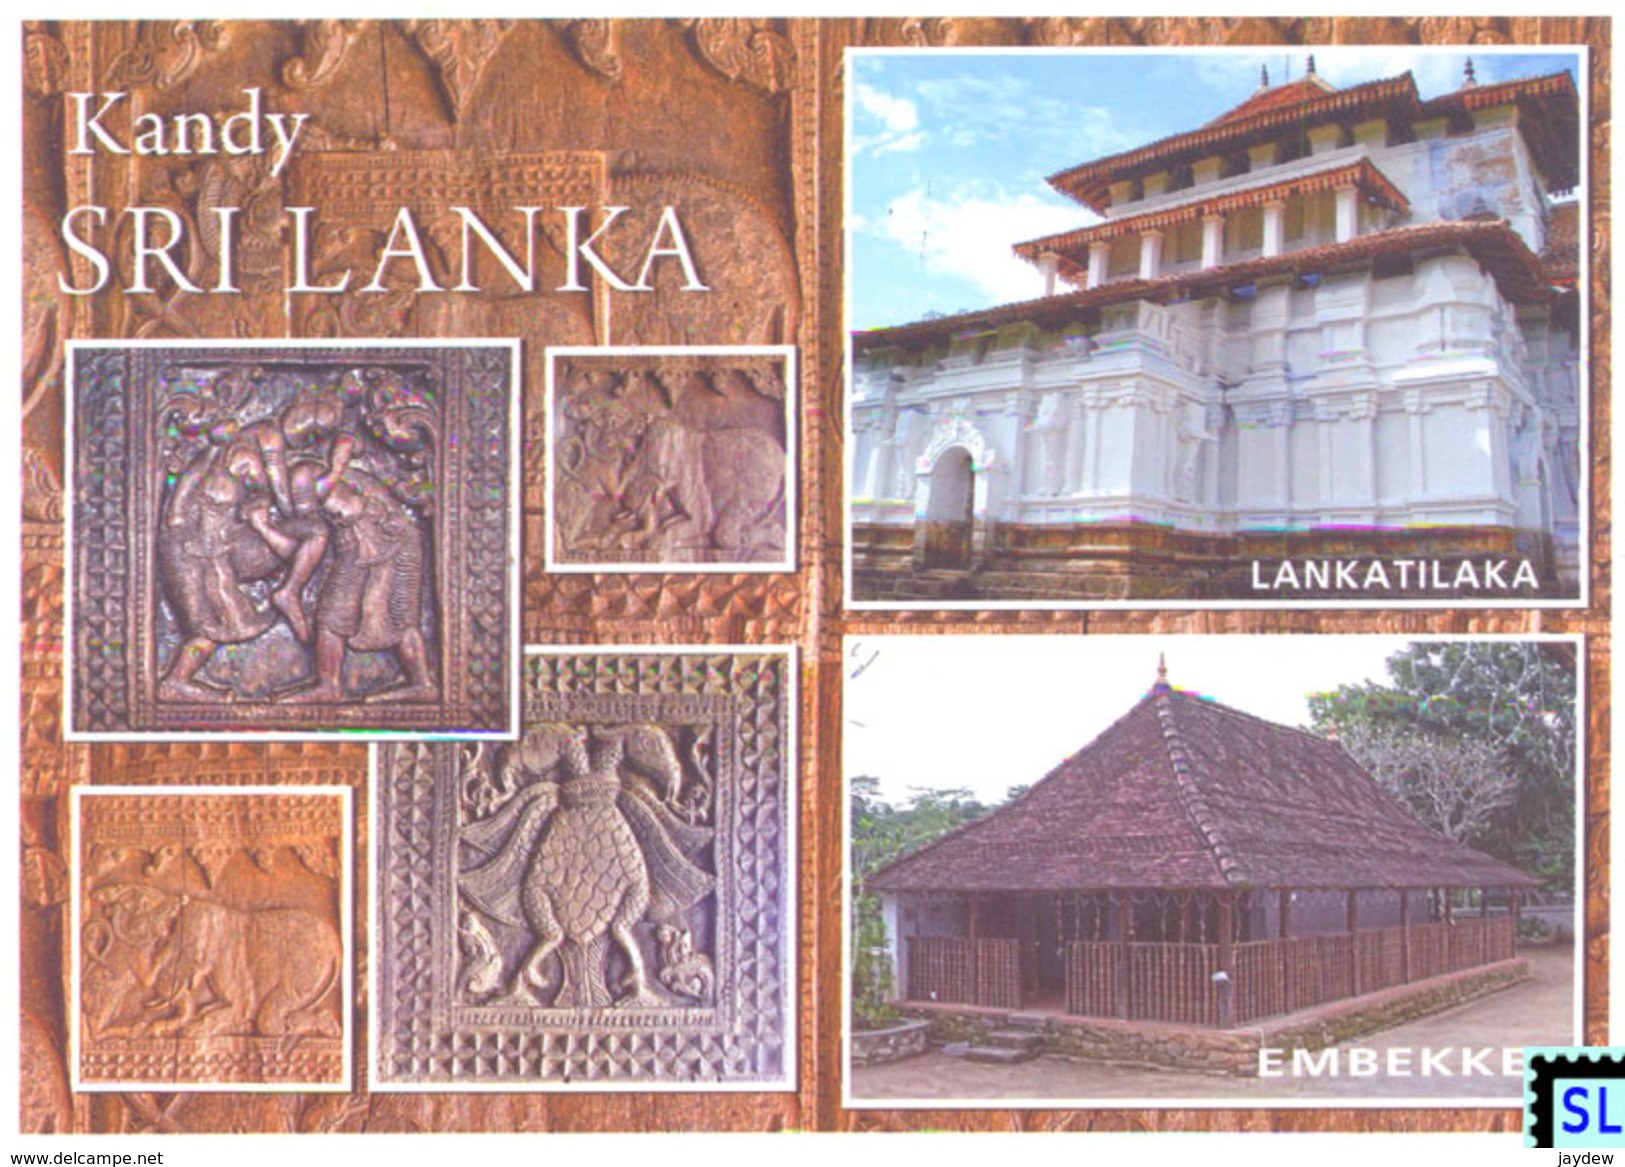 Sri Lanka Postcards, Kandy, Lankatilaka, Embekke, Postcard - Sri Lanka (Ceylon)